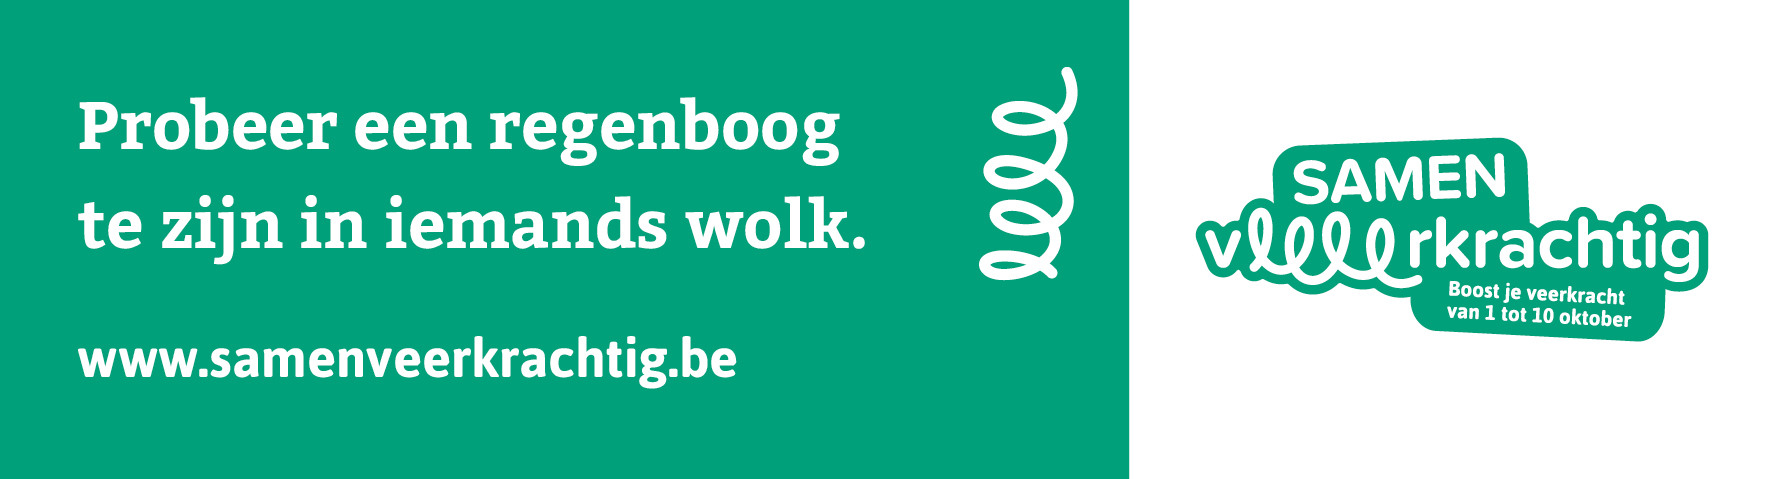 Daagse Geestelijke Gezondheid Logo Limburg